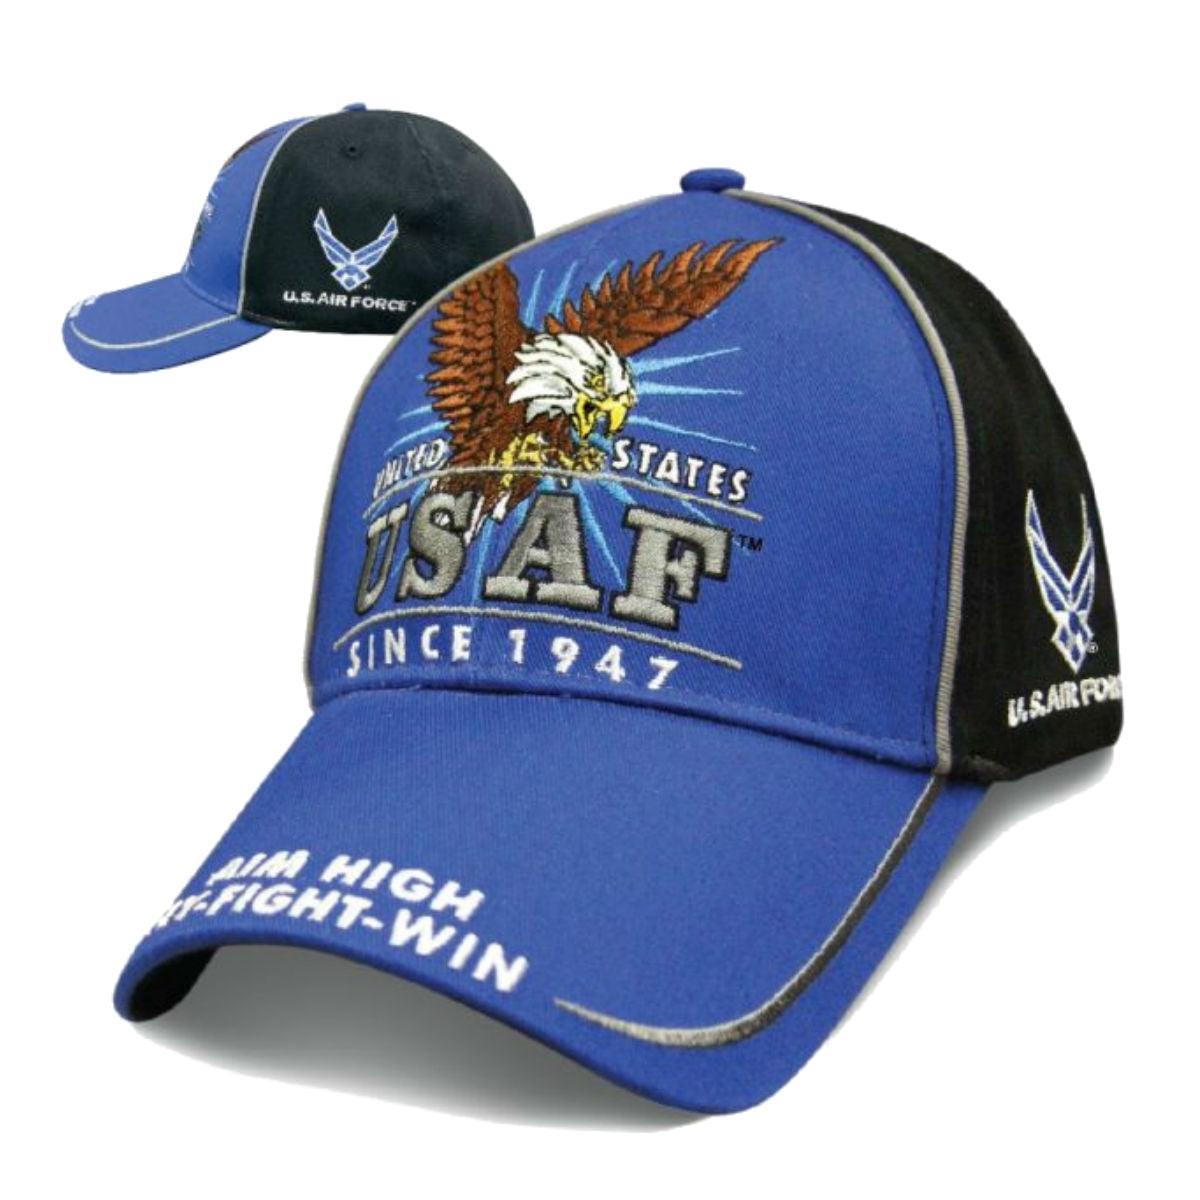 Daniel Smart Victory - Air Force Hat, Unisex, Blue/Black - American Legend Rider